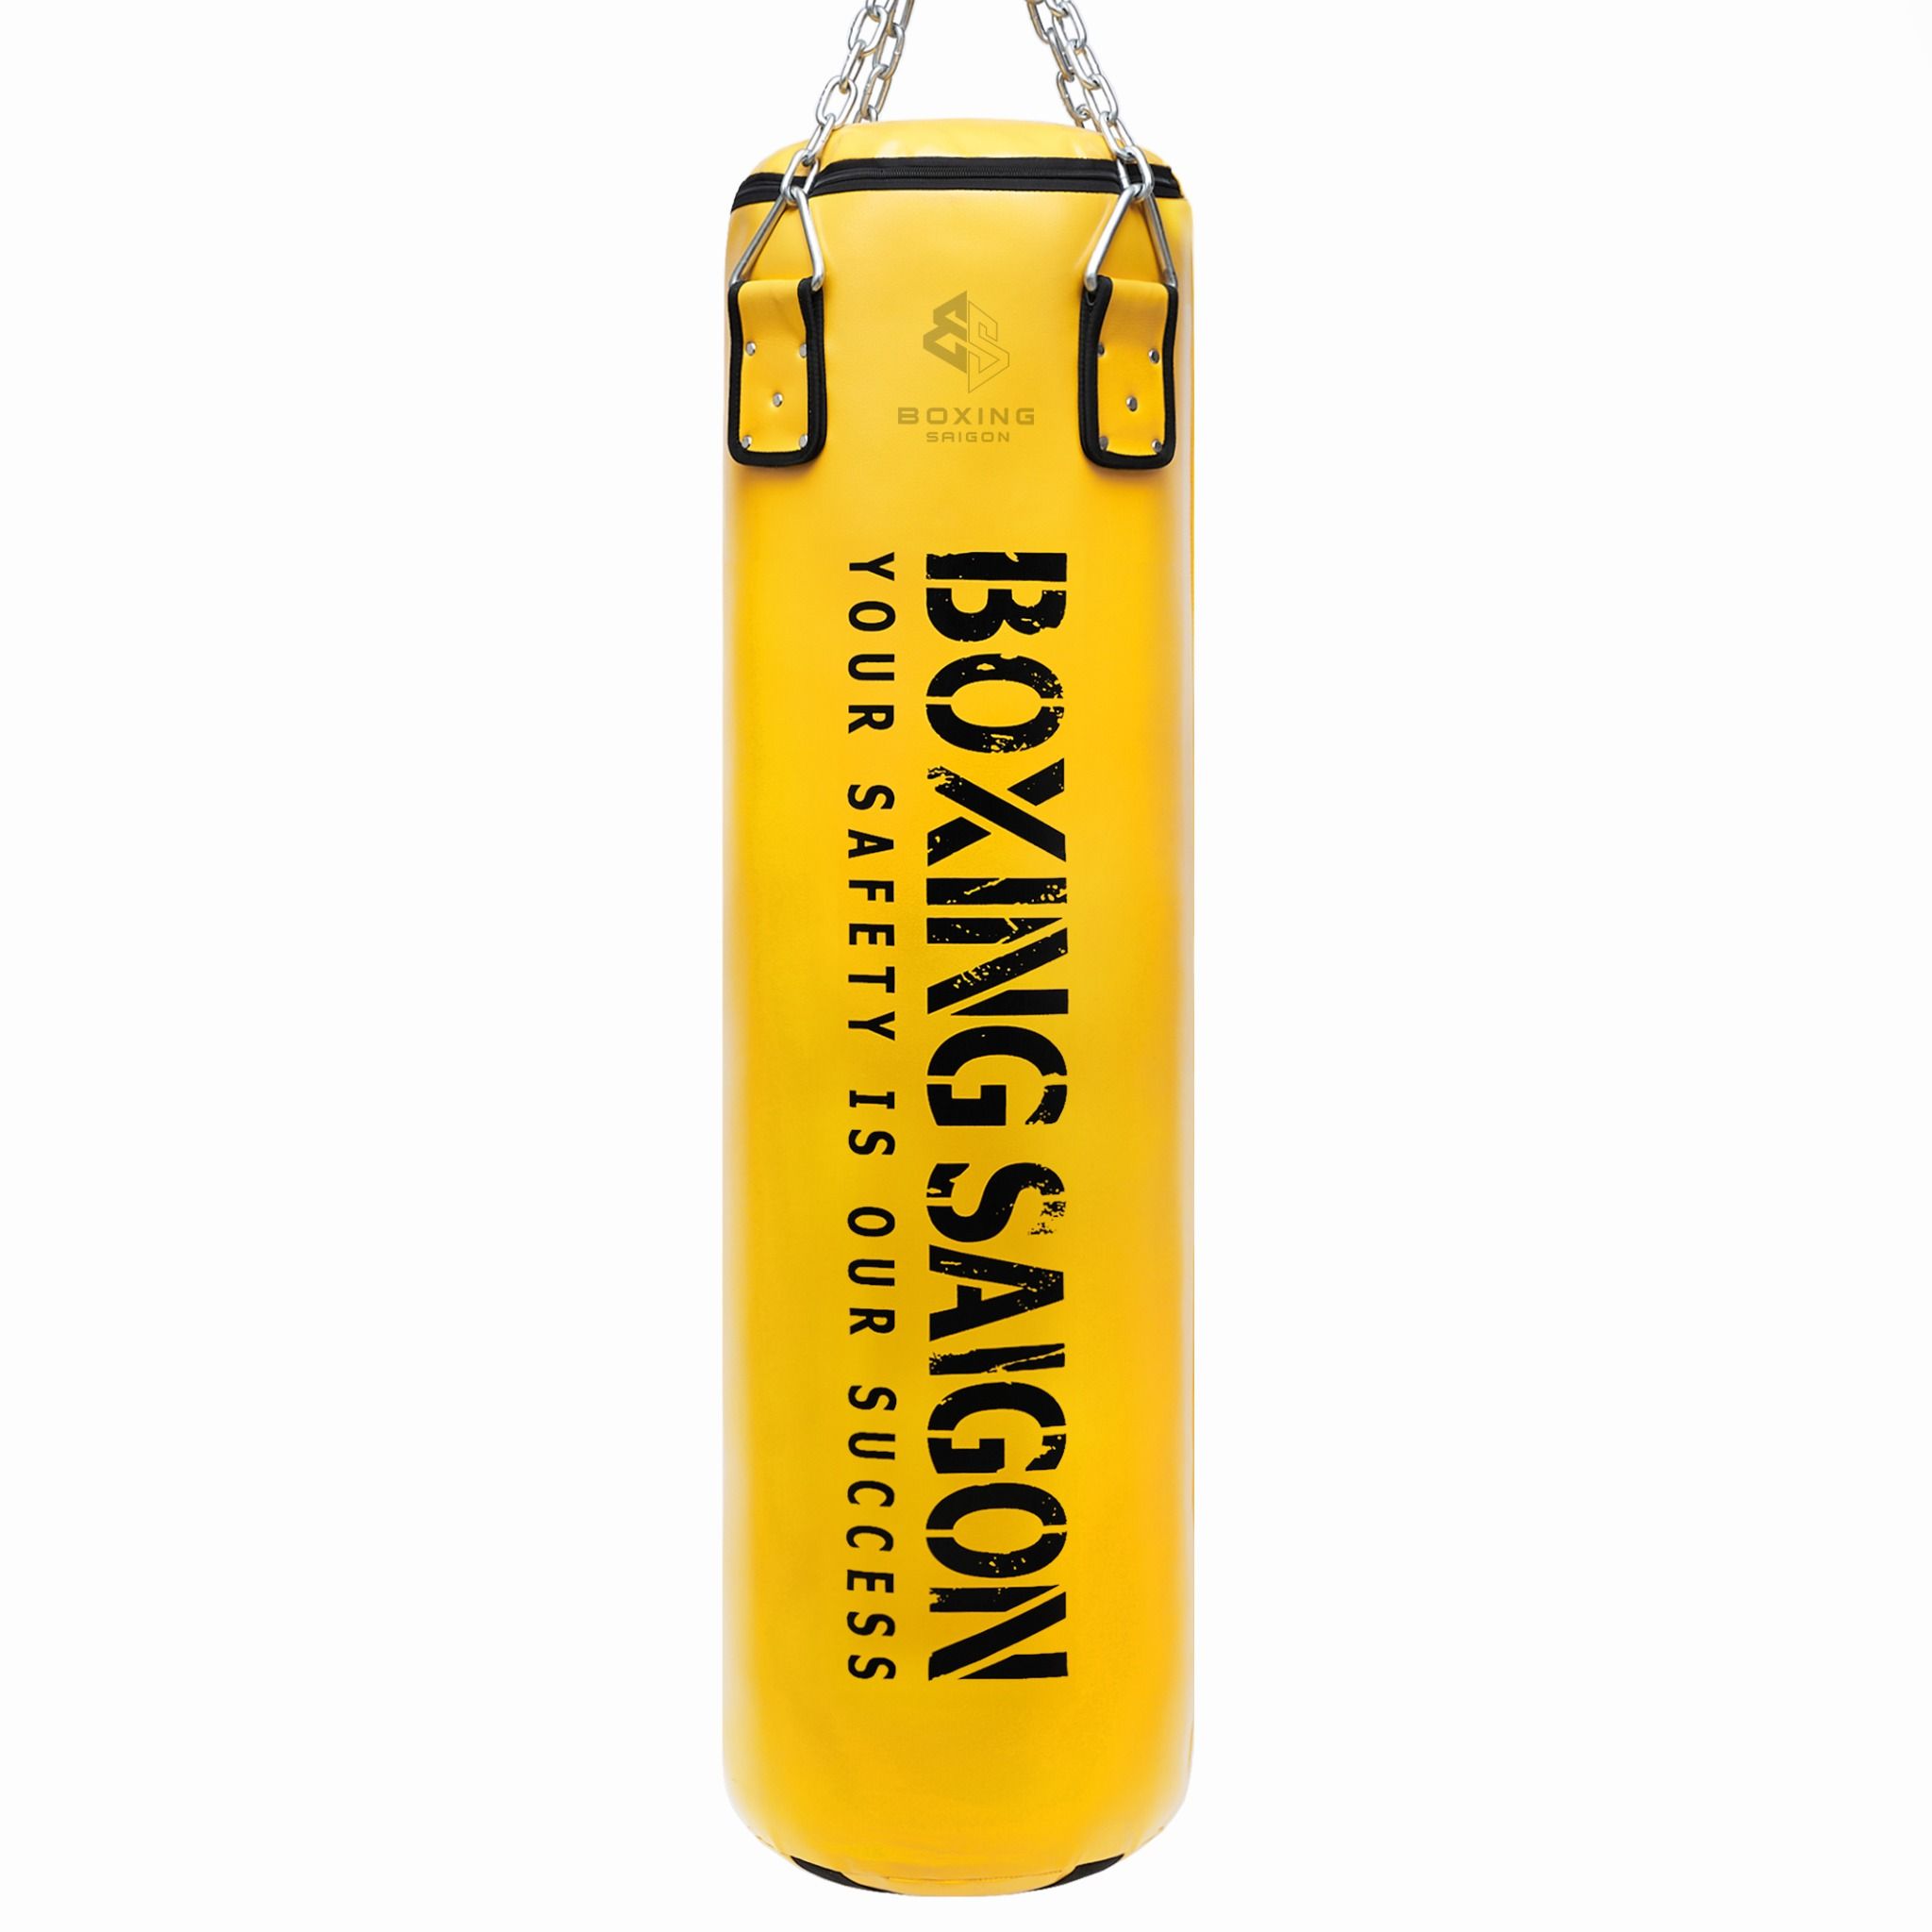 Bao Cát Treo Boxing Punching Bag 1M2 - Yellow